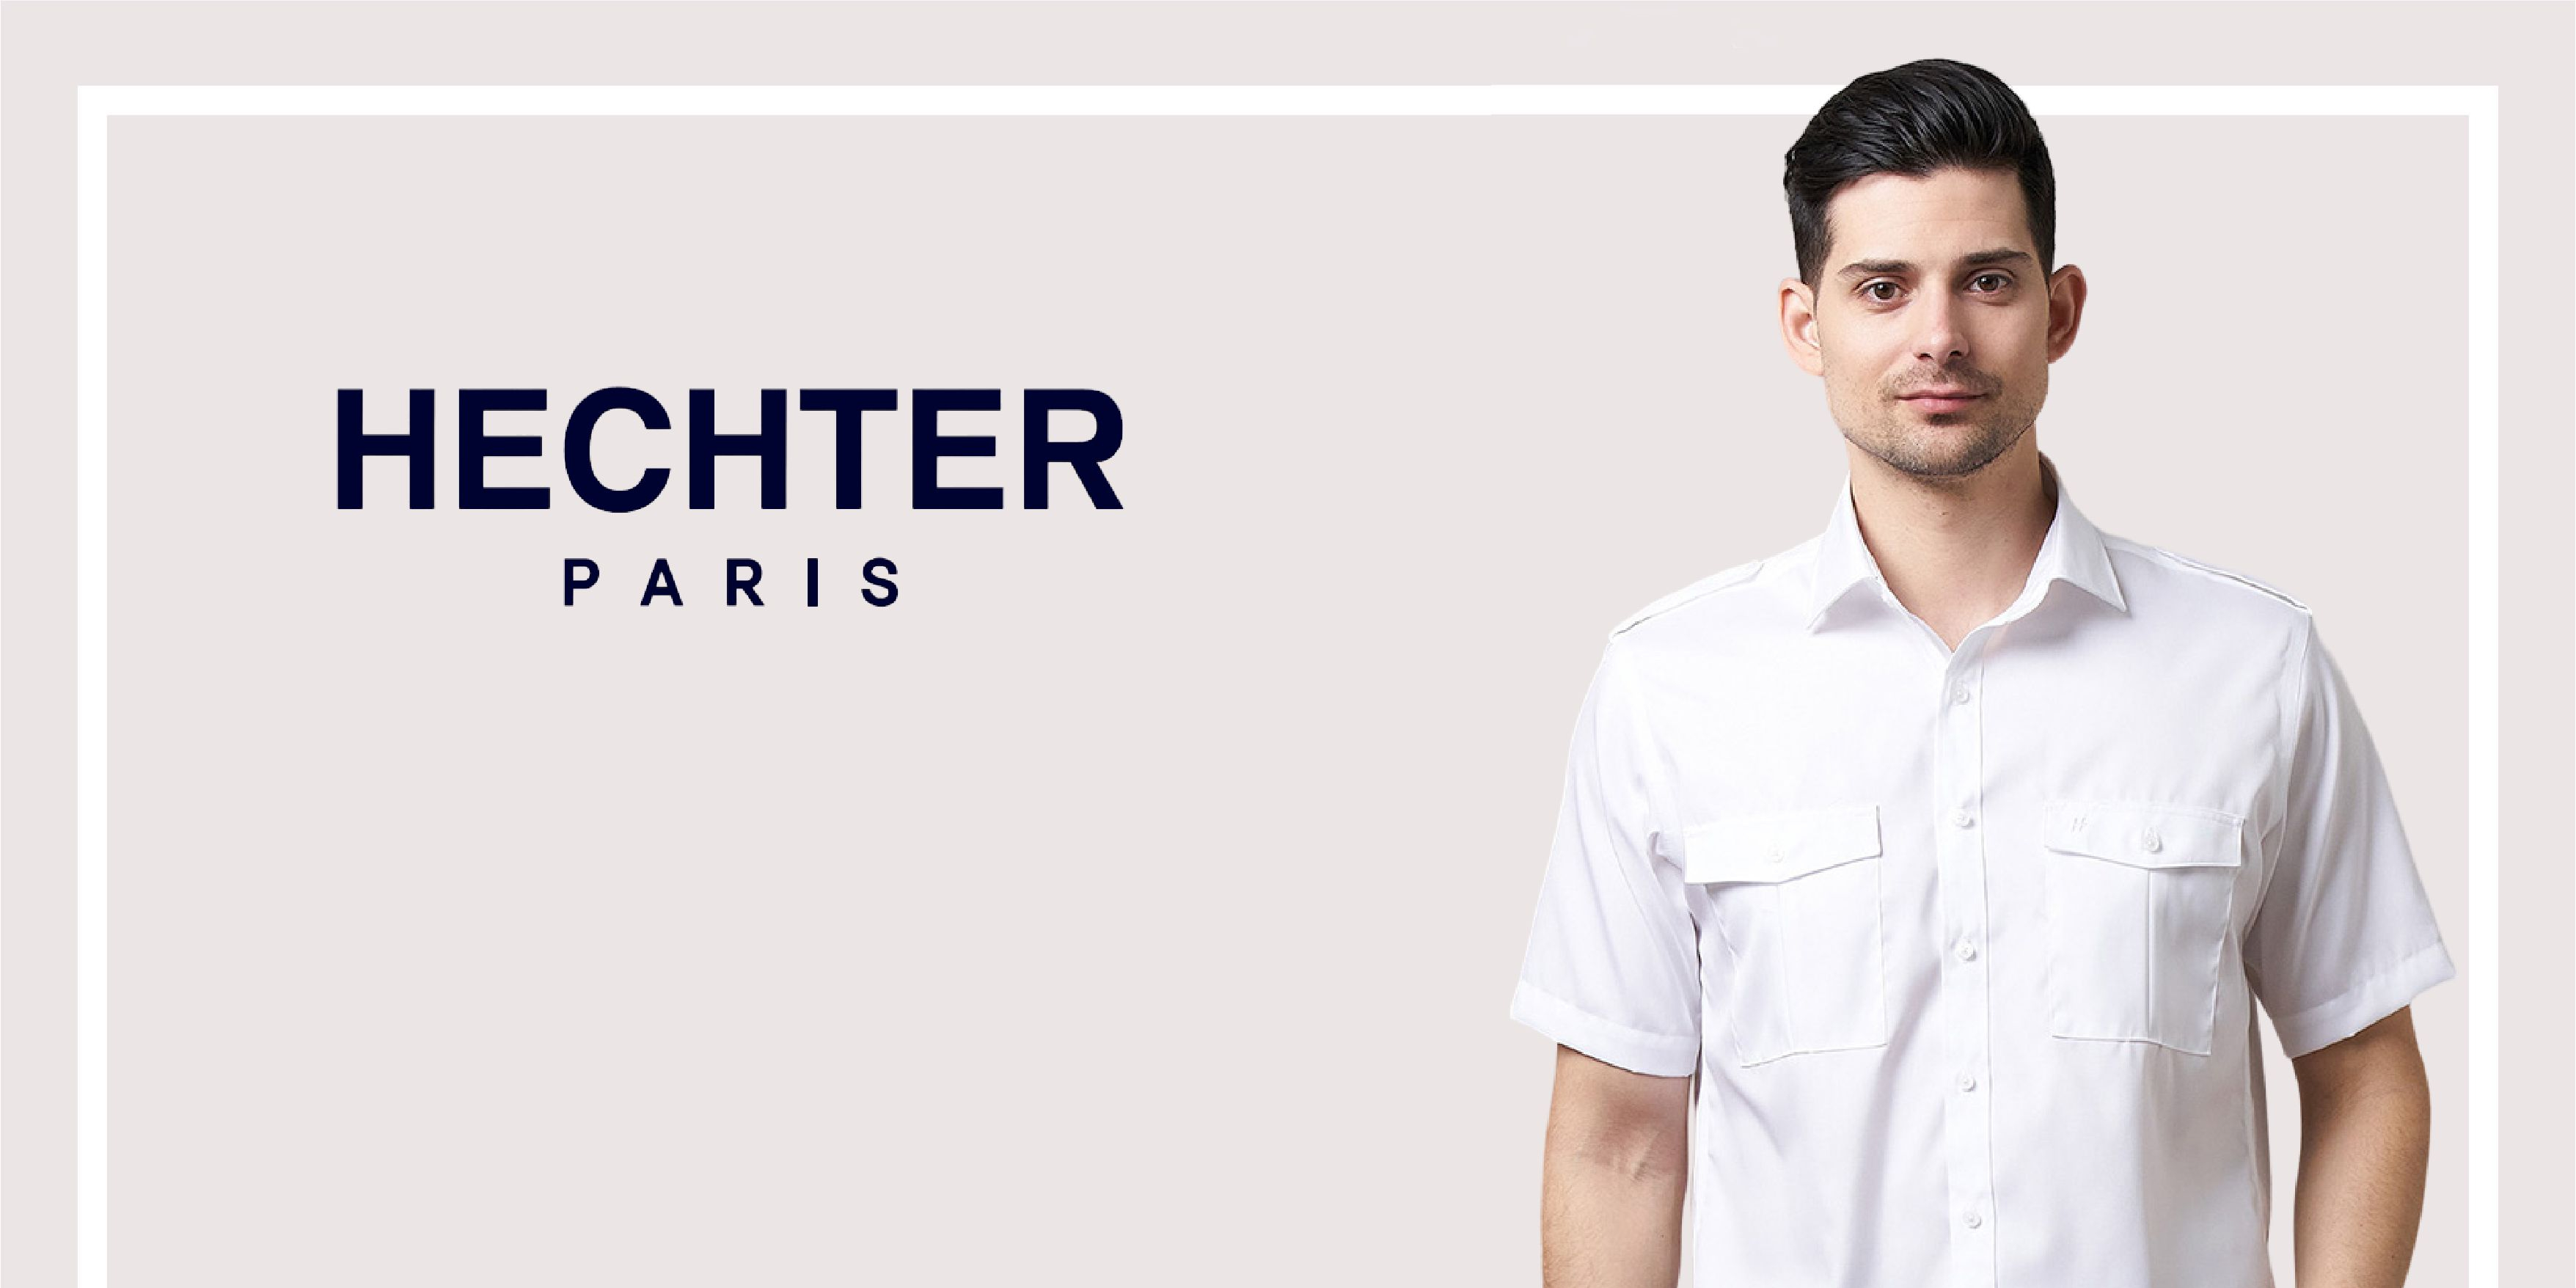 Toko Online Hechter Paris Shopee Official | Indonesia Shop